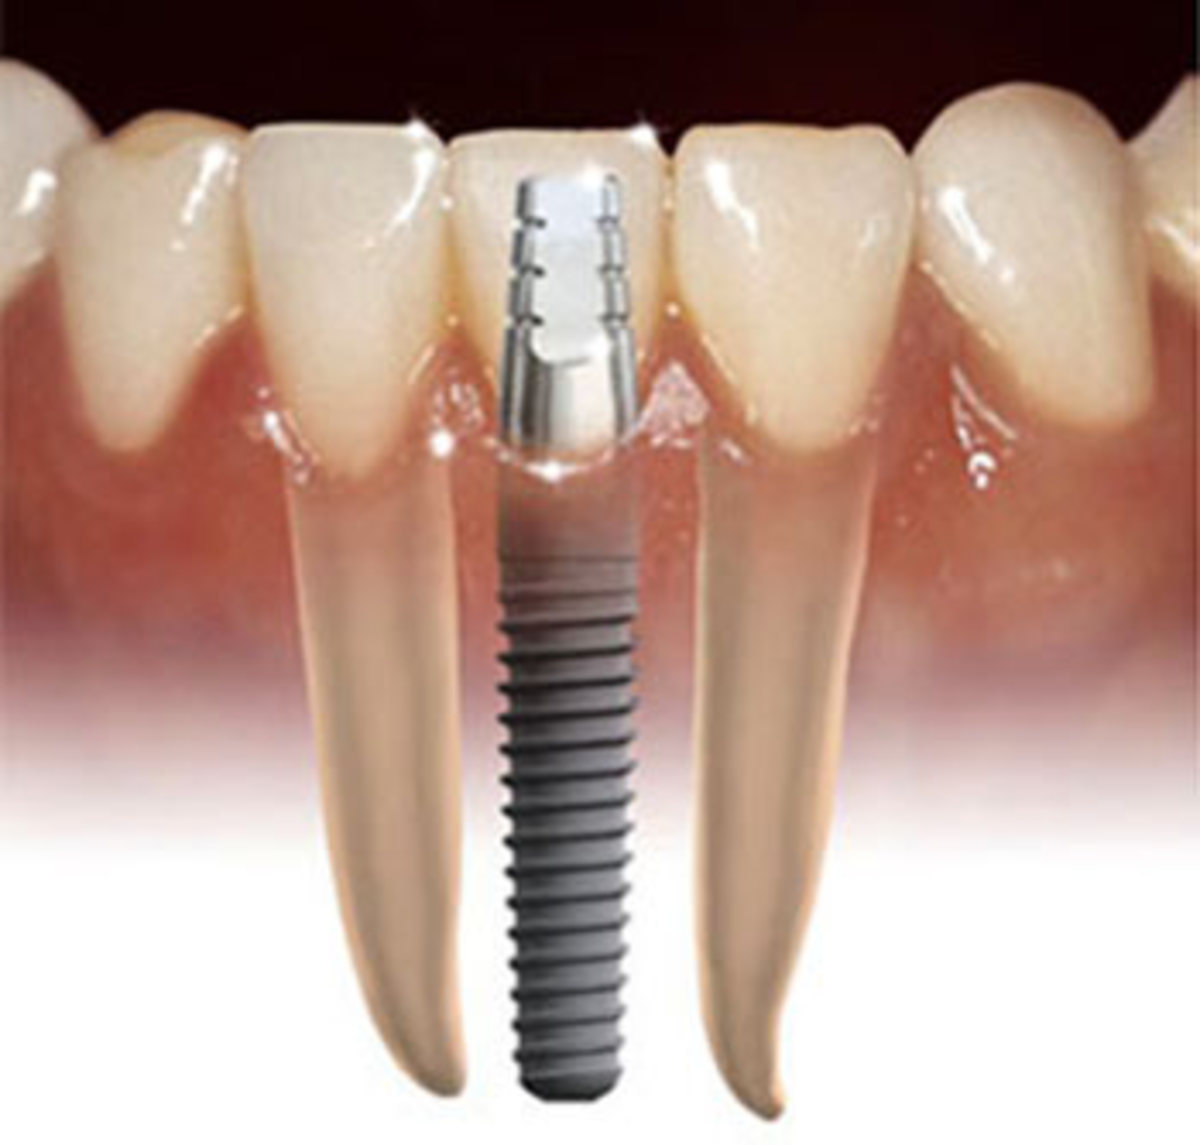 free-dental-implants-info